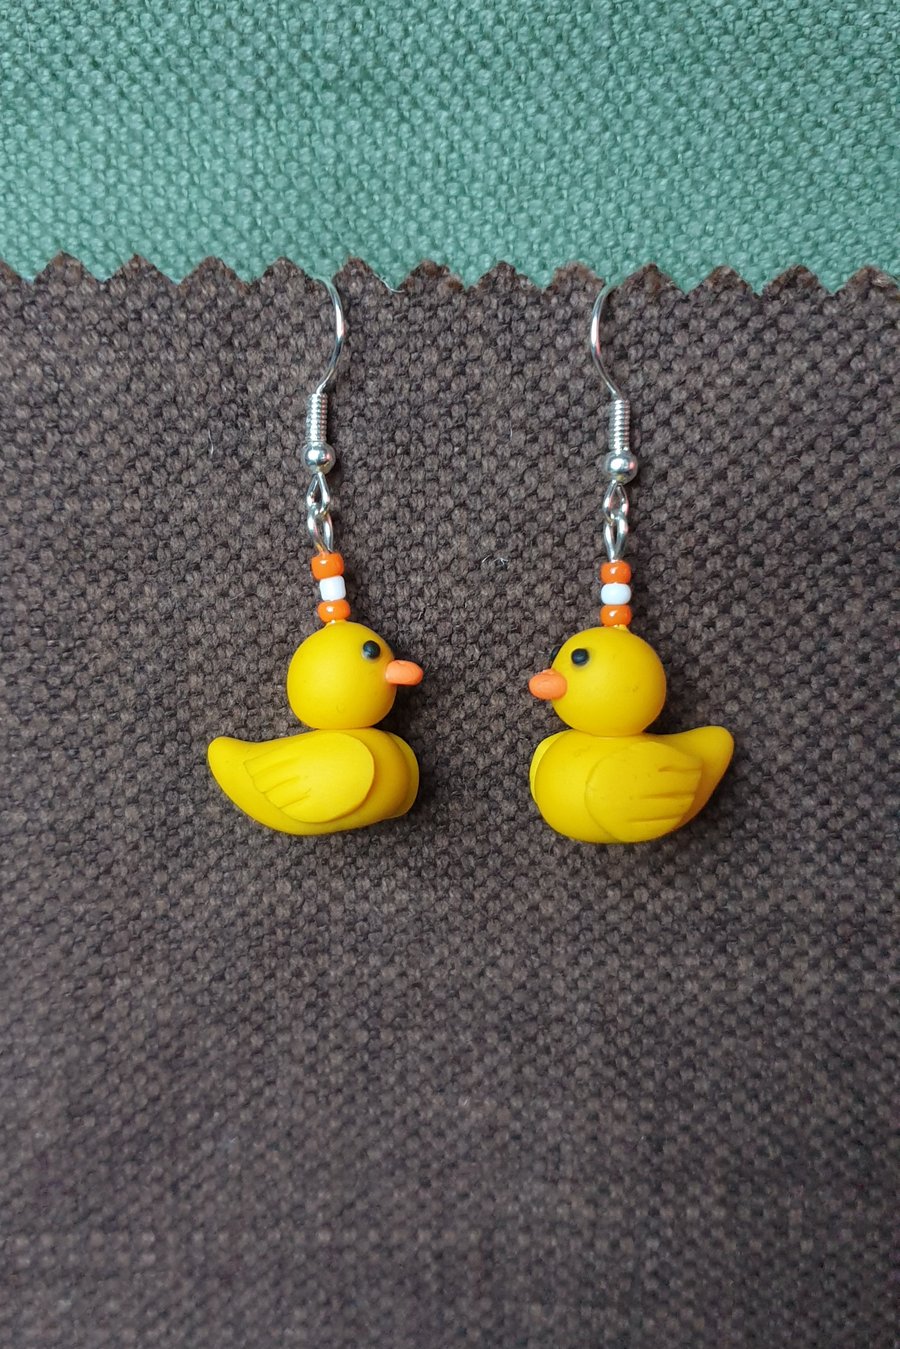 Handmade Rubber Duck Earrings.